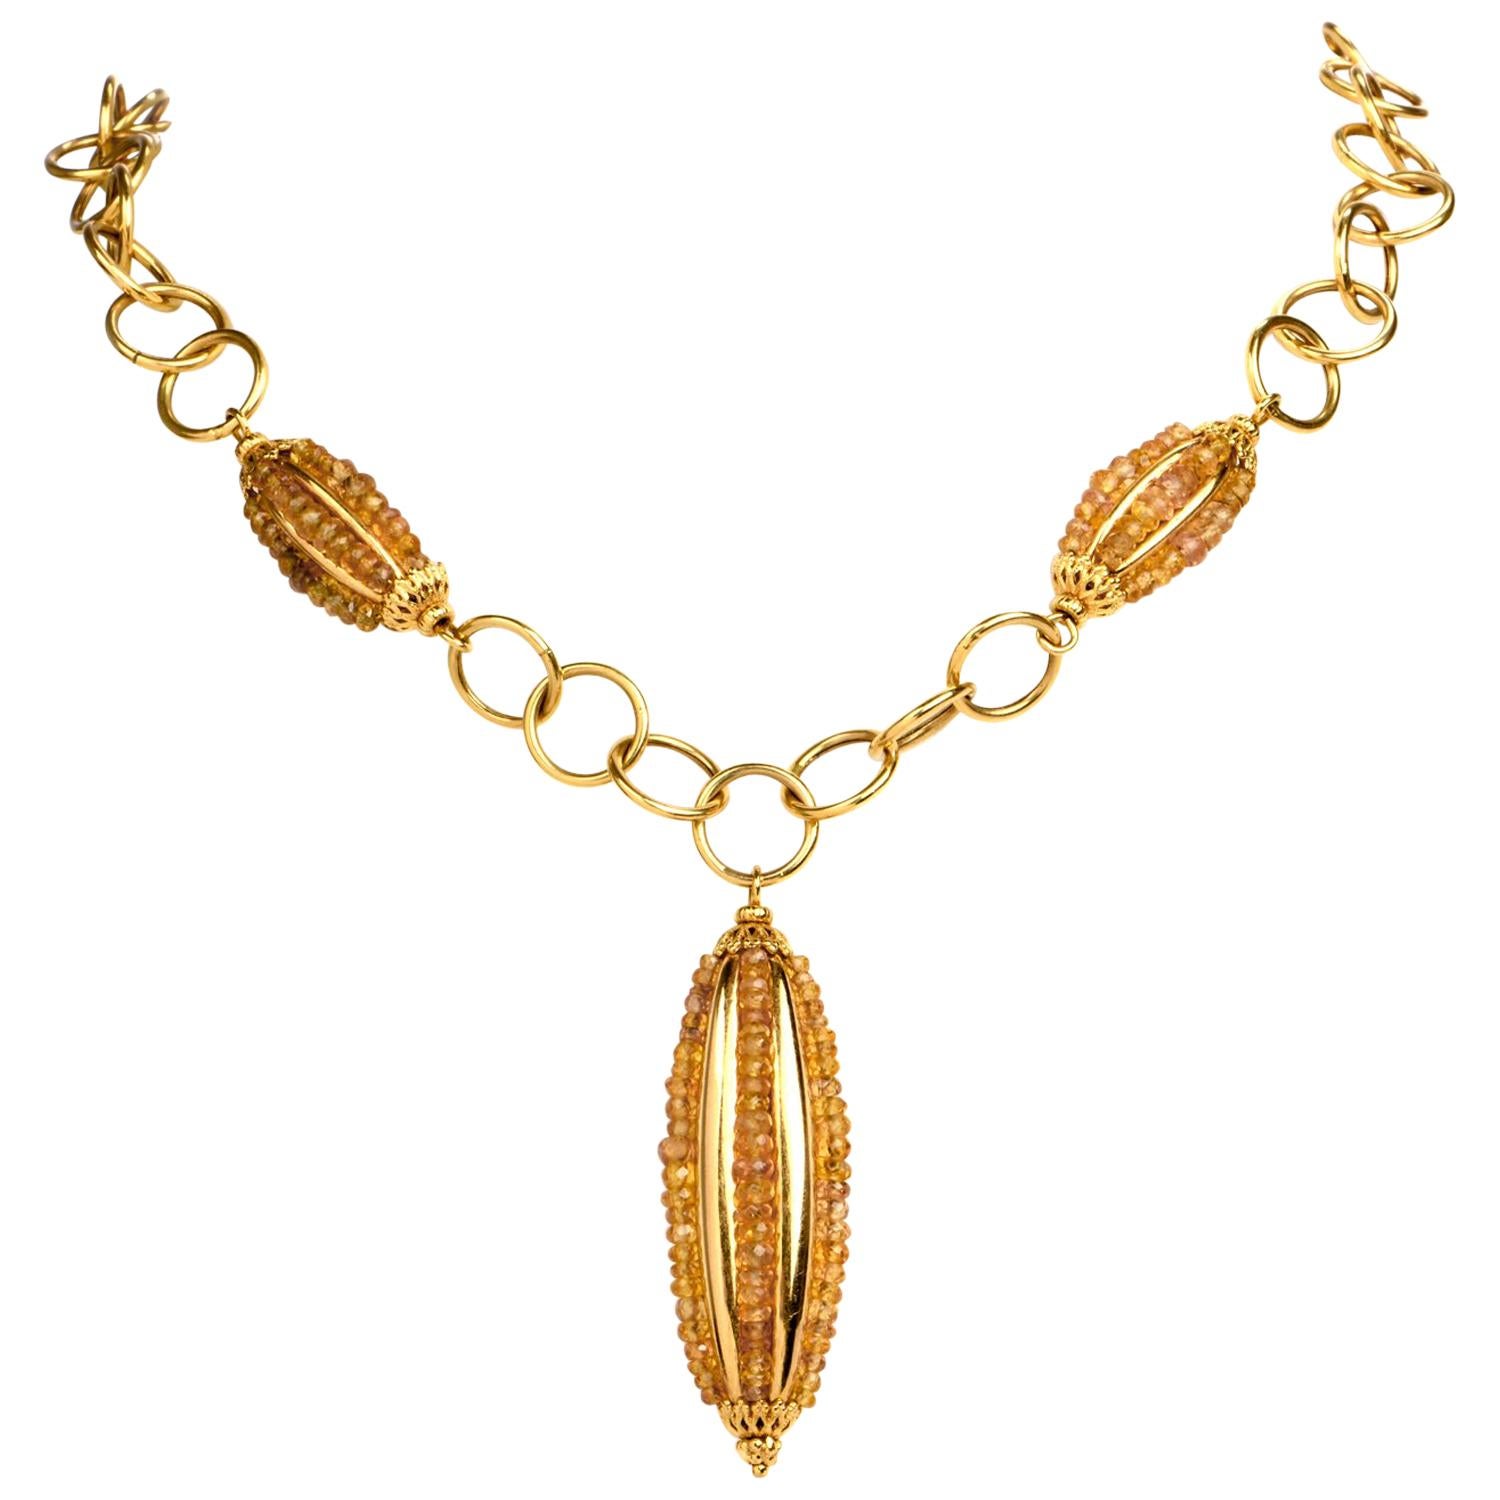 21st Century Citrine Bead Yellow Gold Pendant Necklace